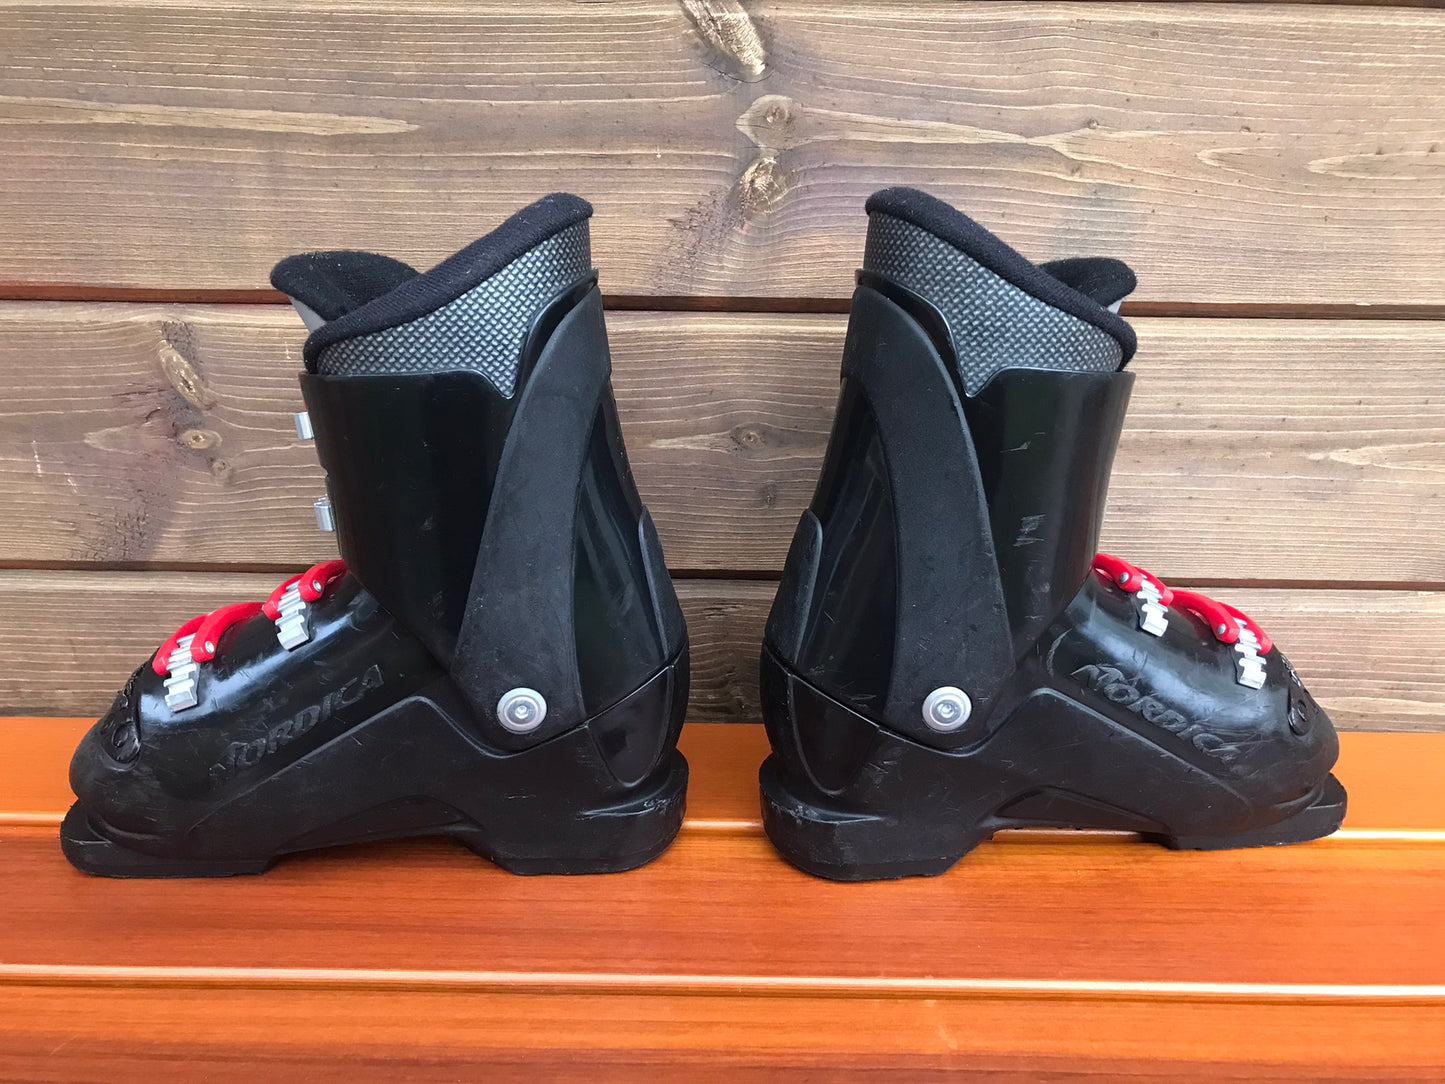 Ski Boots Mondo Size 19.0 -20.0 Child Size 1-2 240 mm Nordica Black Red Minor Wear Scratches